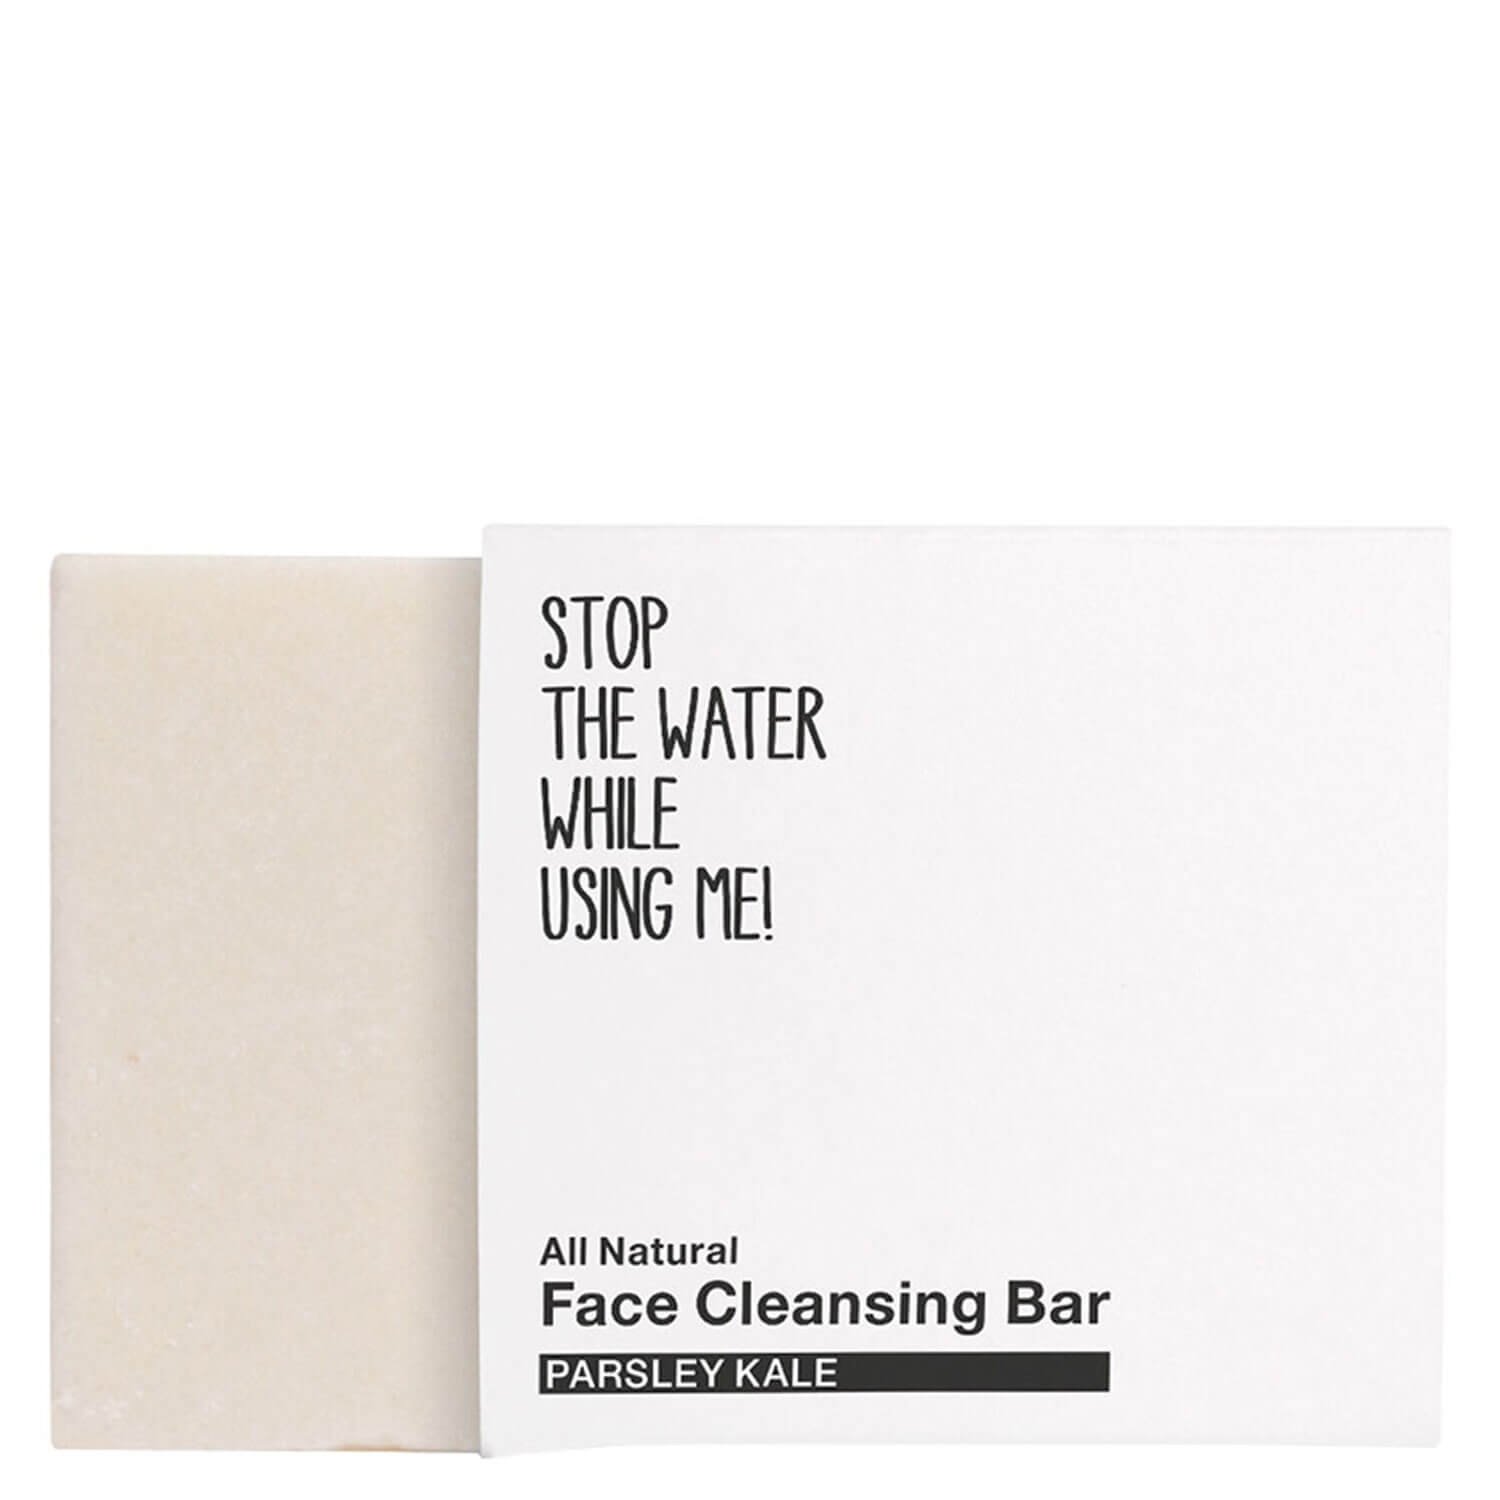 Produktbild von All Natural Face - Face Cleansing Bar Parsley Kale